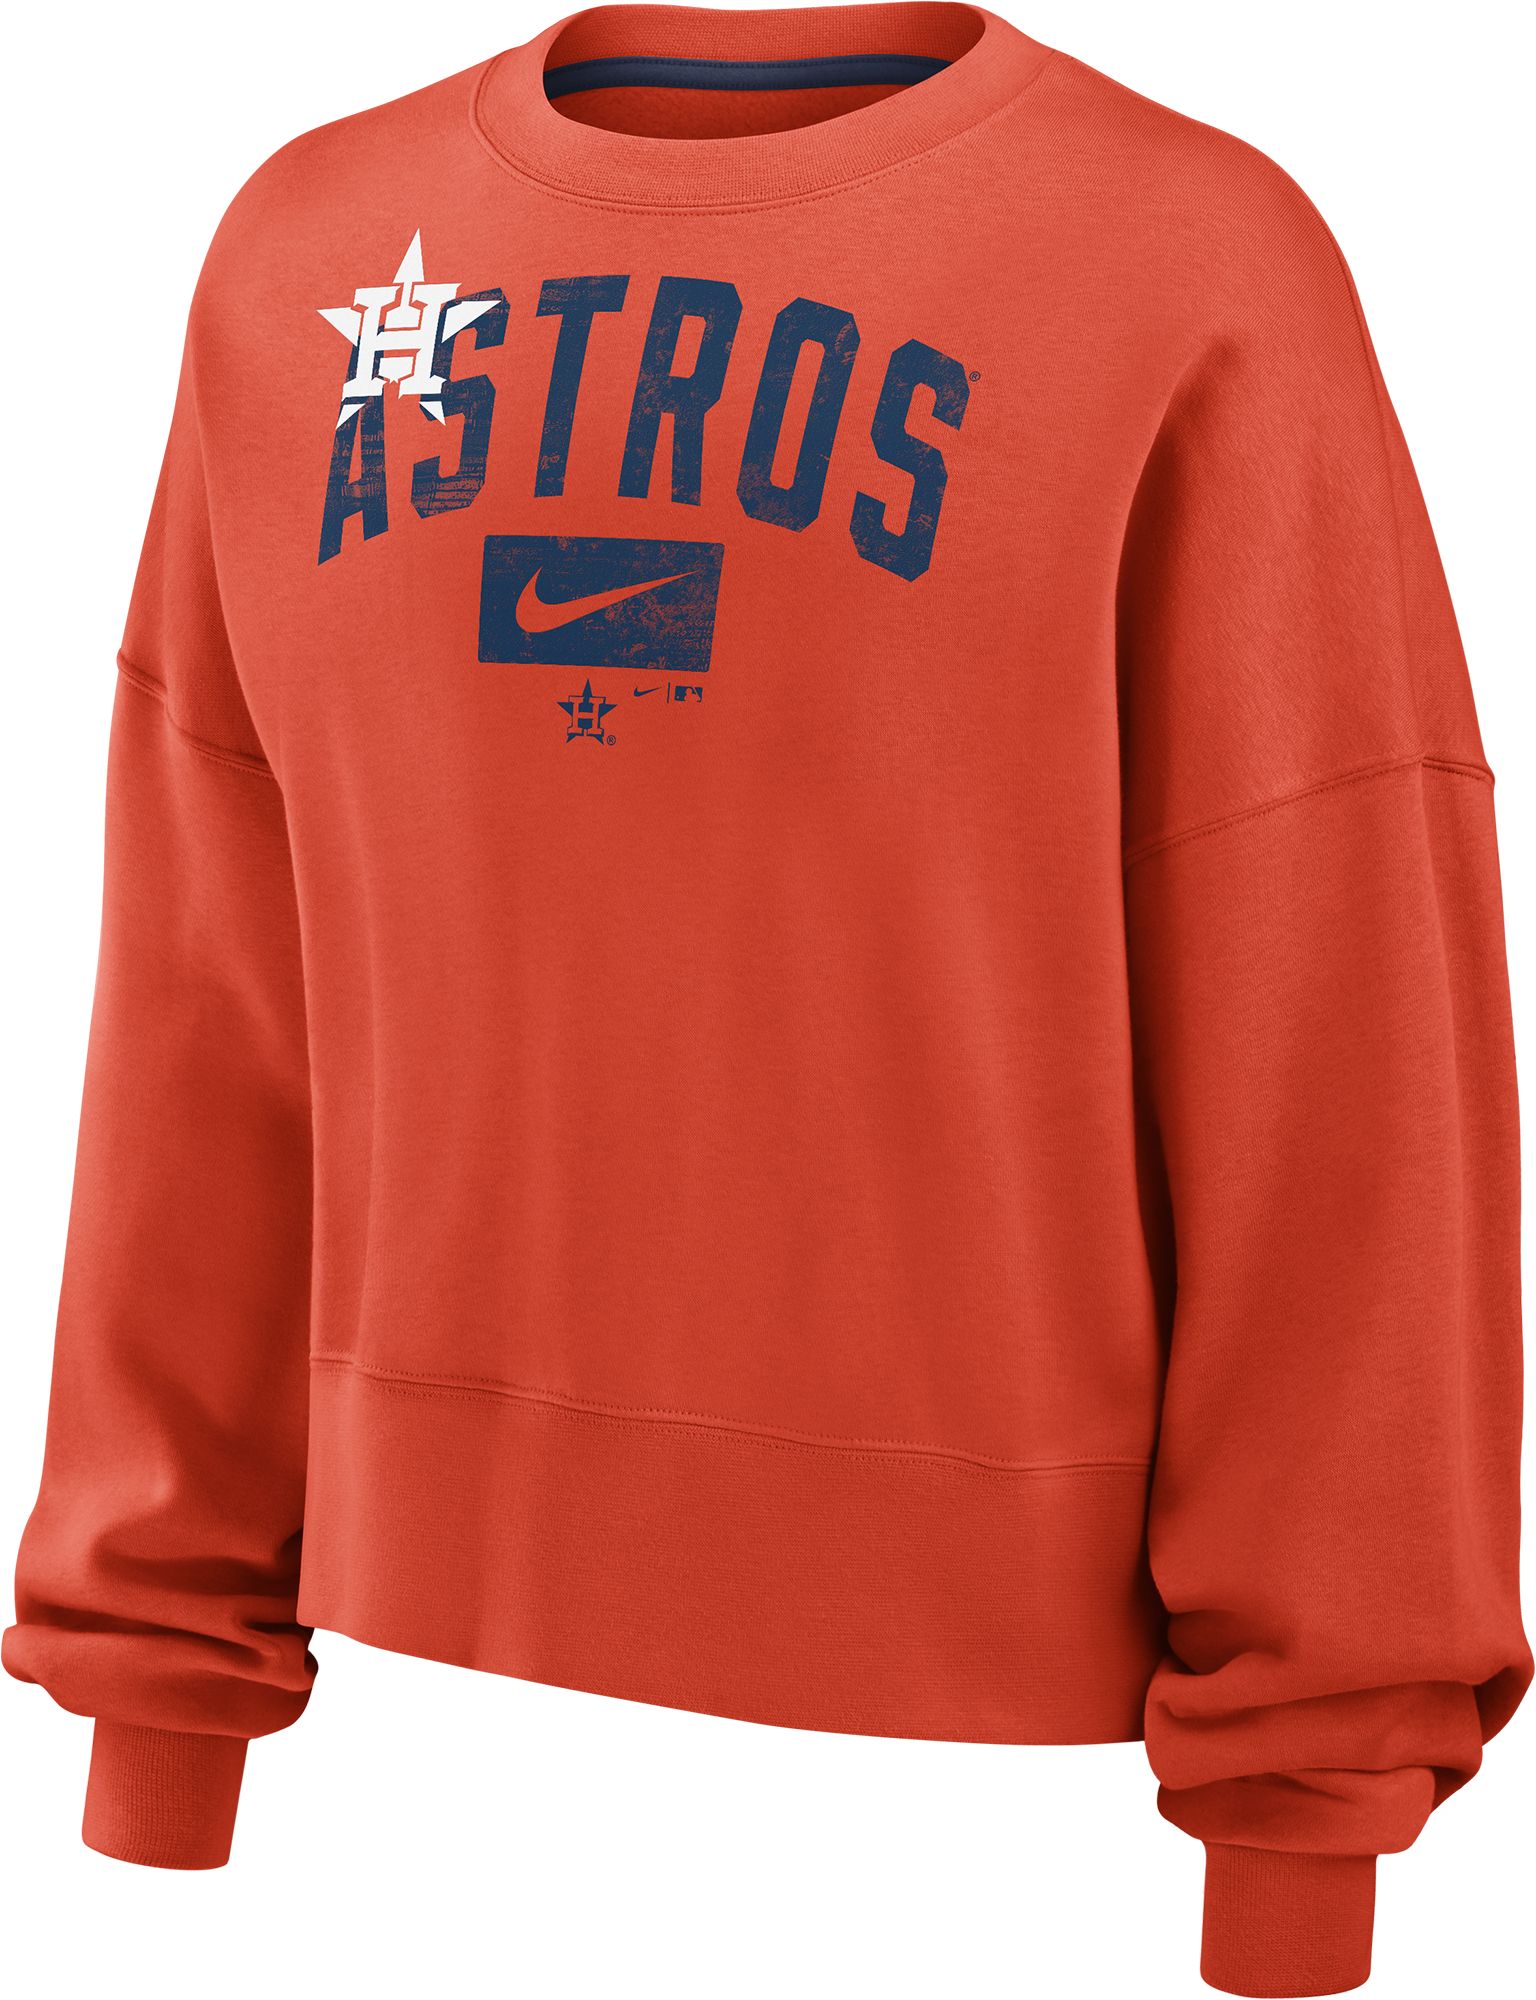 Nike Women's Houston Astros Orange Fleece Crew Neck Sweatshirt